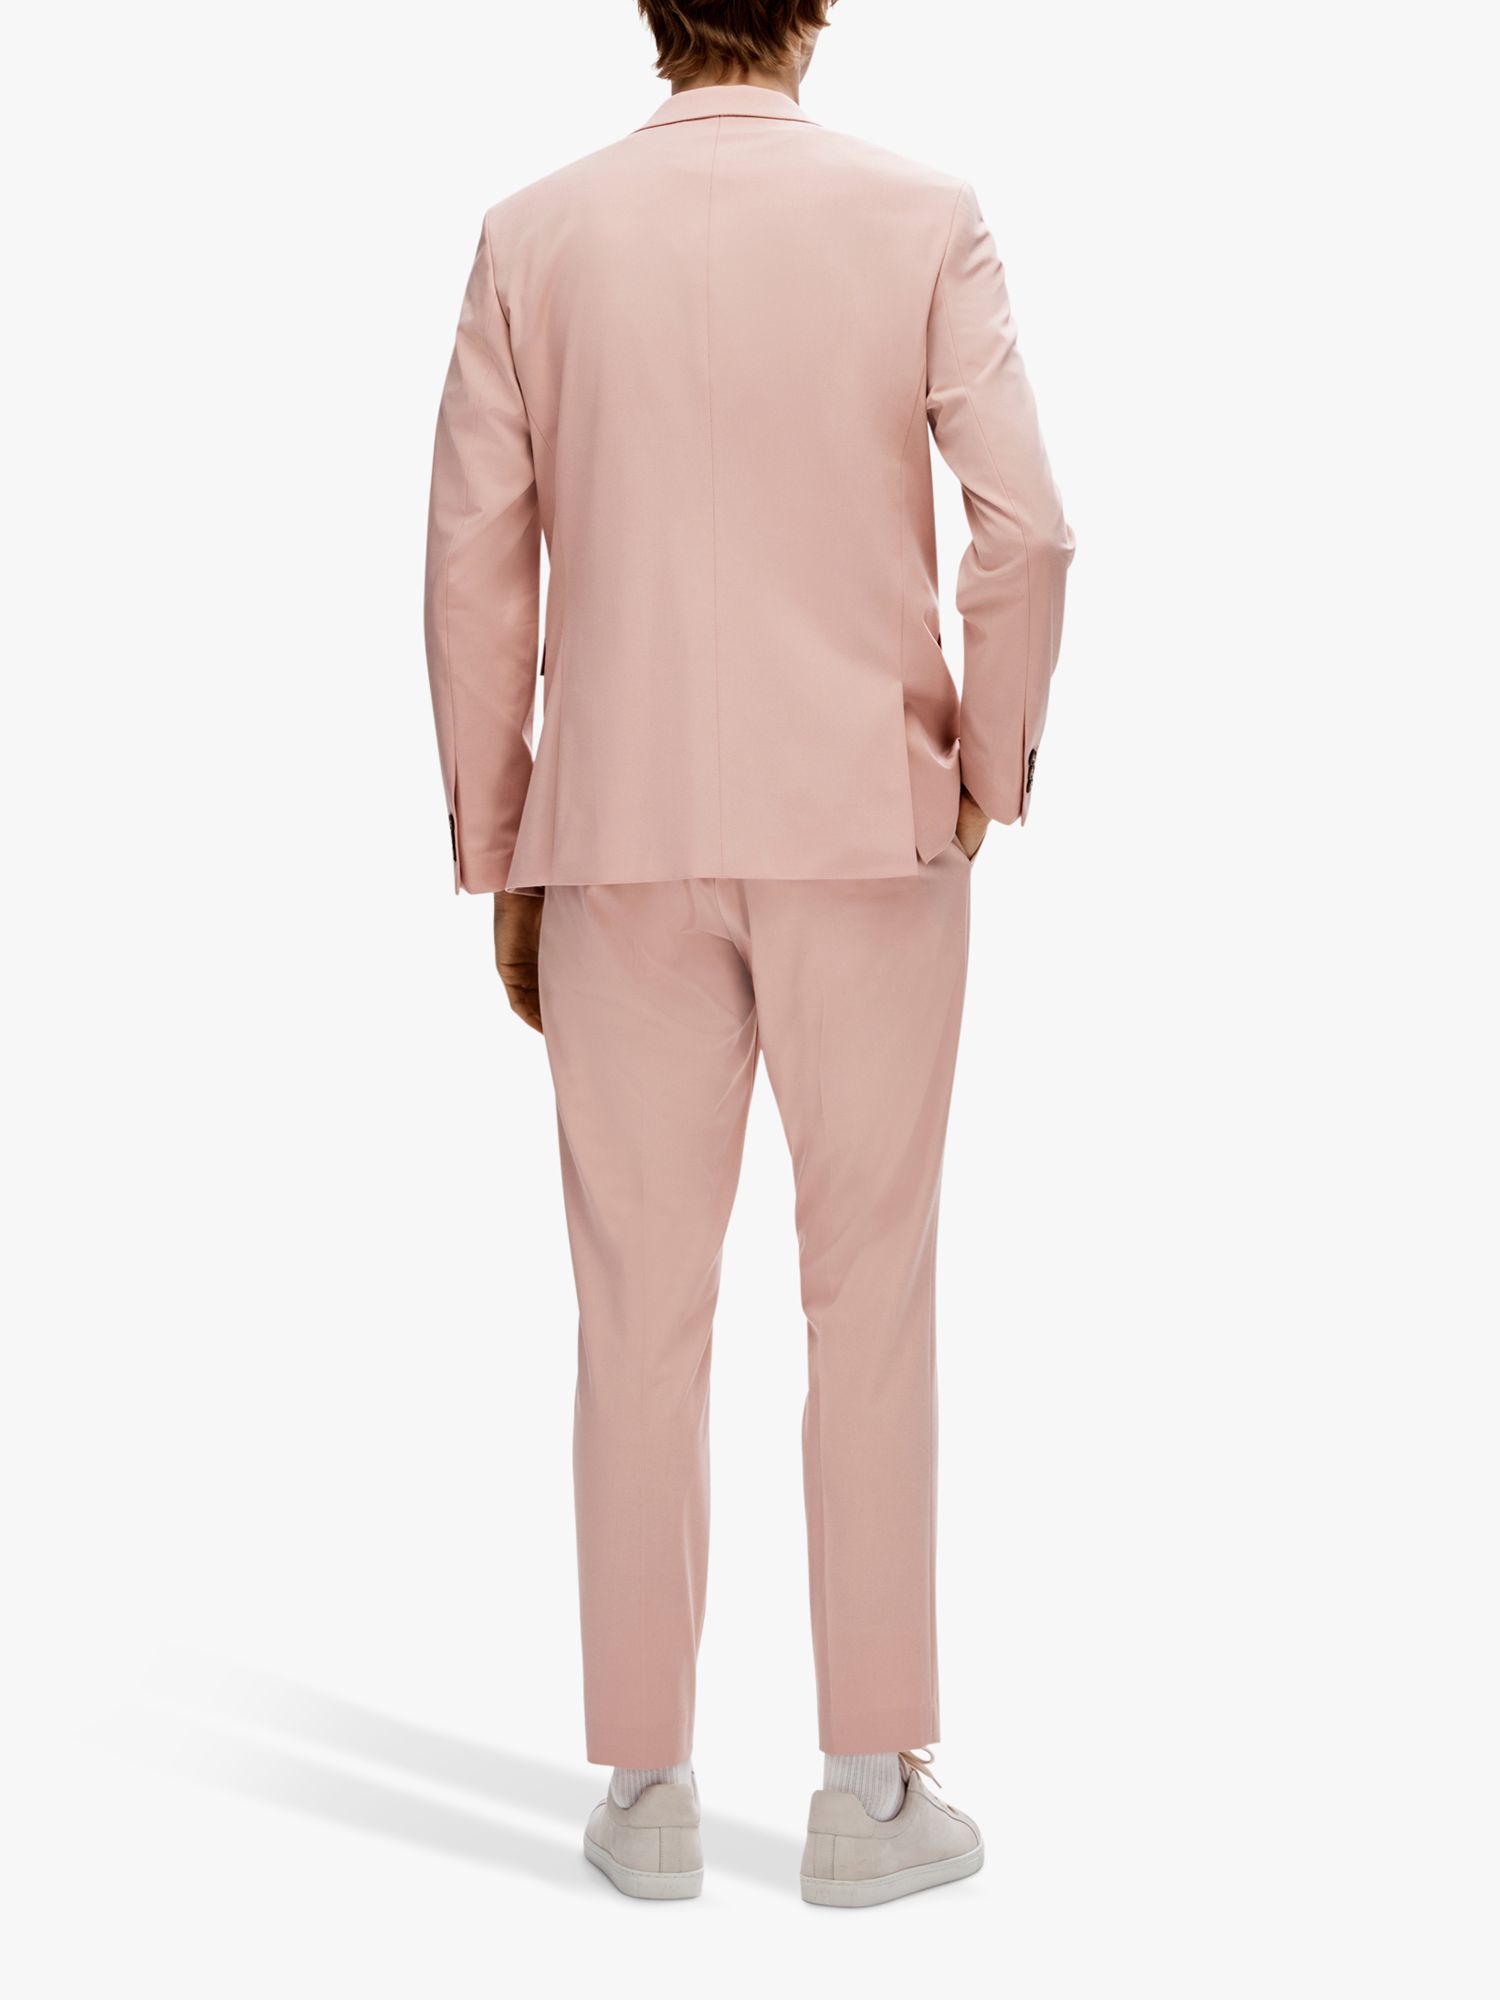 SELECTED HOMME Slim Fit Suit Jacket, Pink, 38R